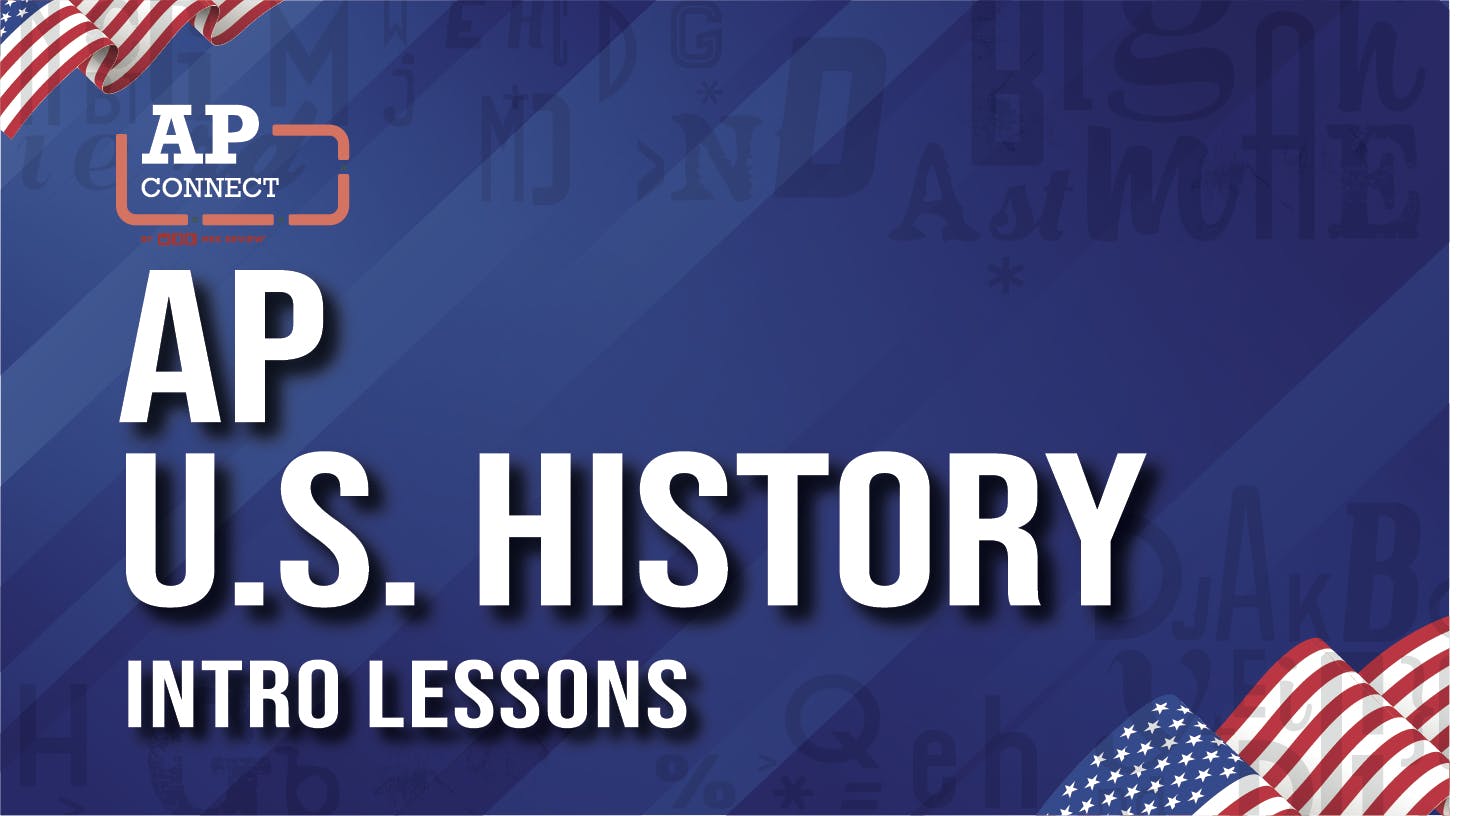 AP U.S. History Intro Lessons (FREE)